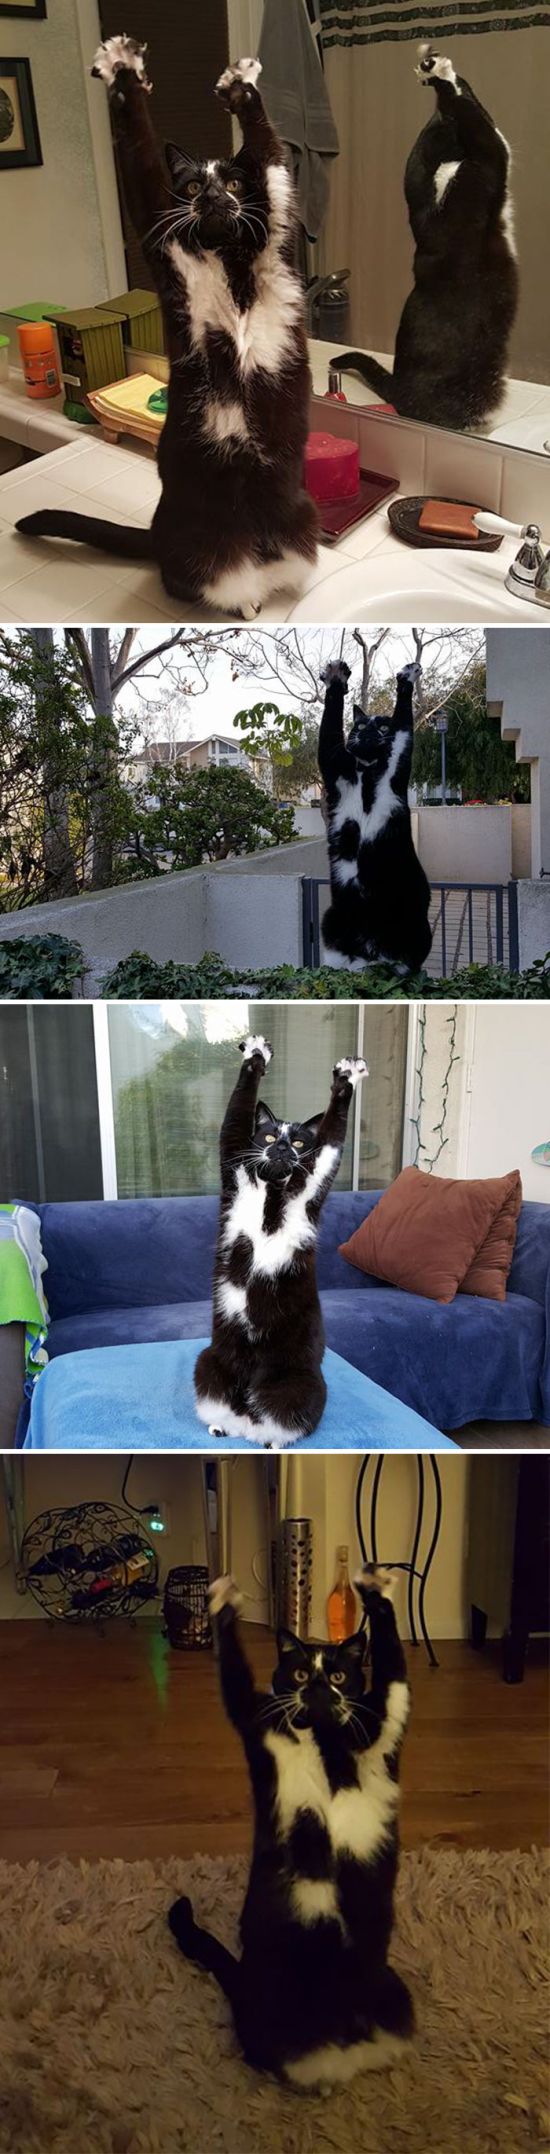 Pics Of Cats Acting Weird (30 pics)